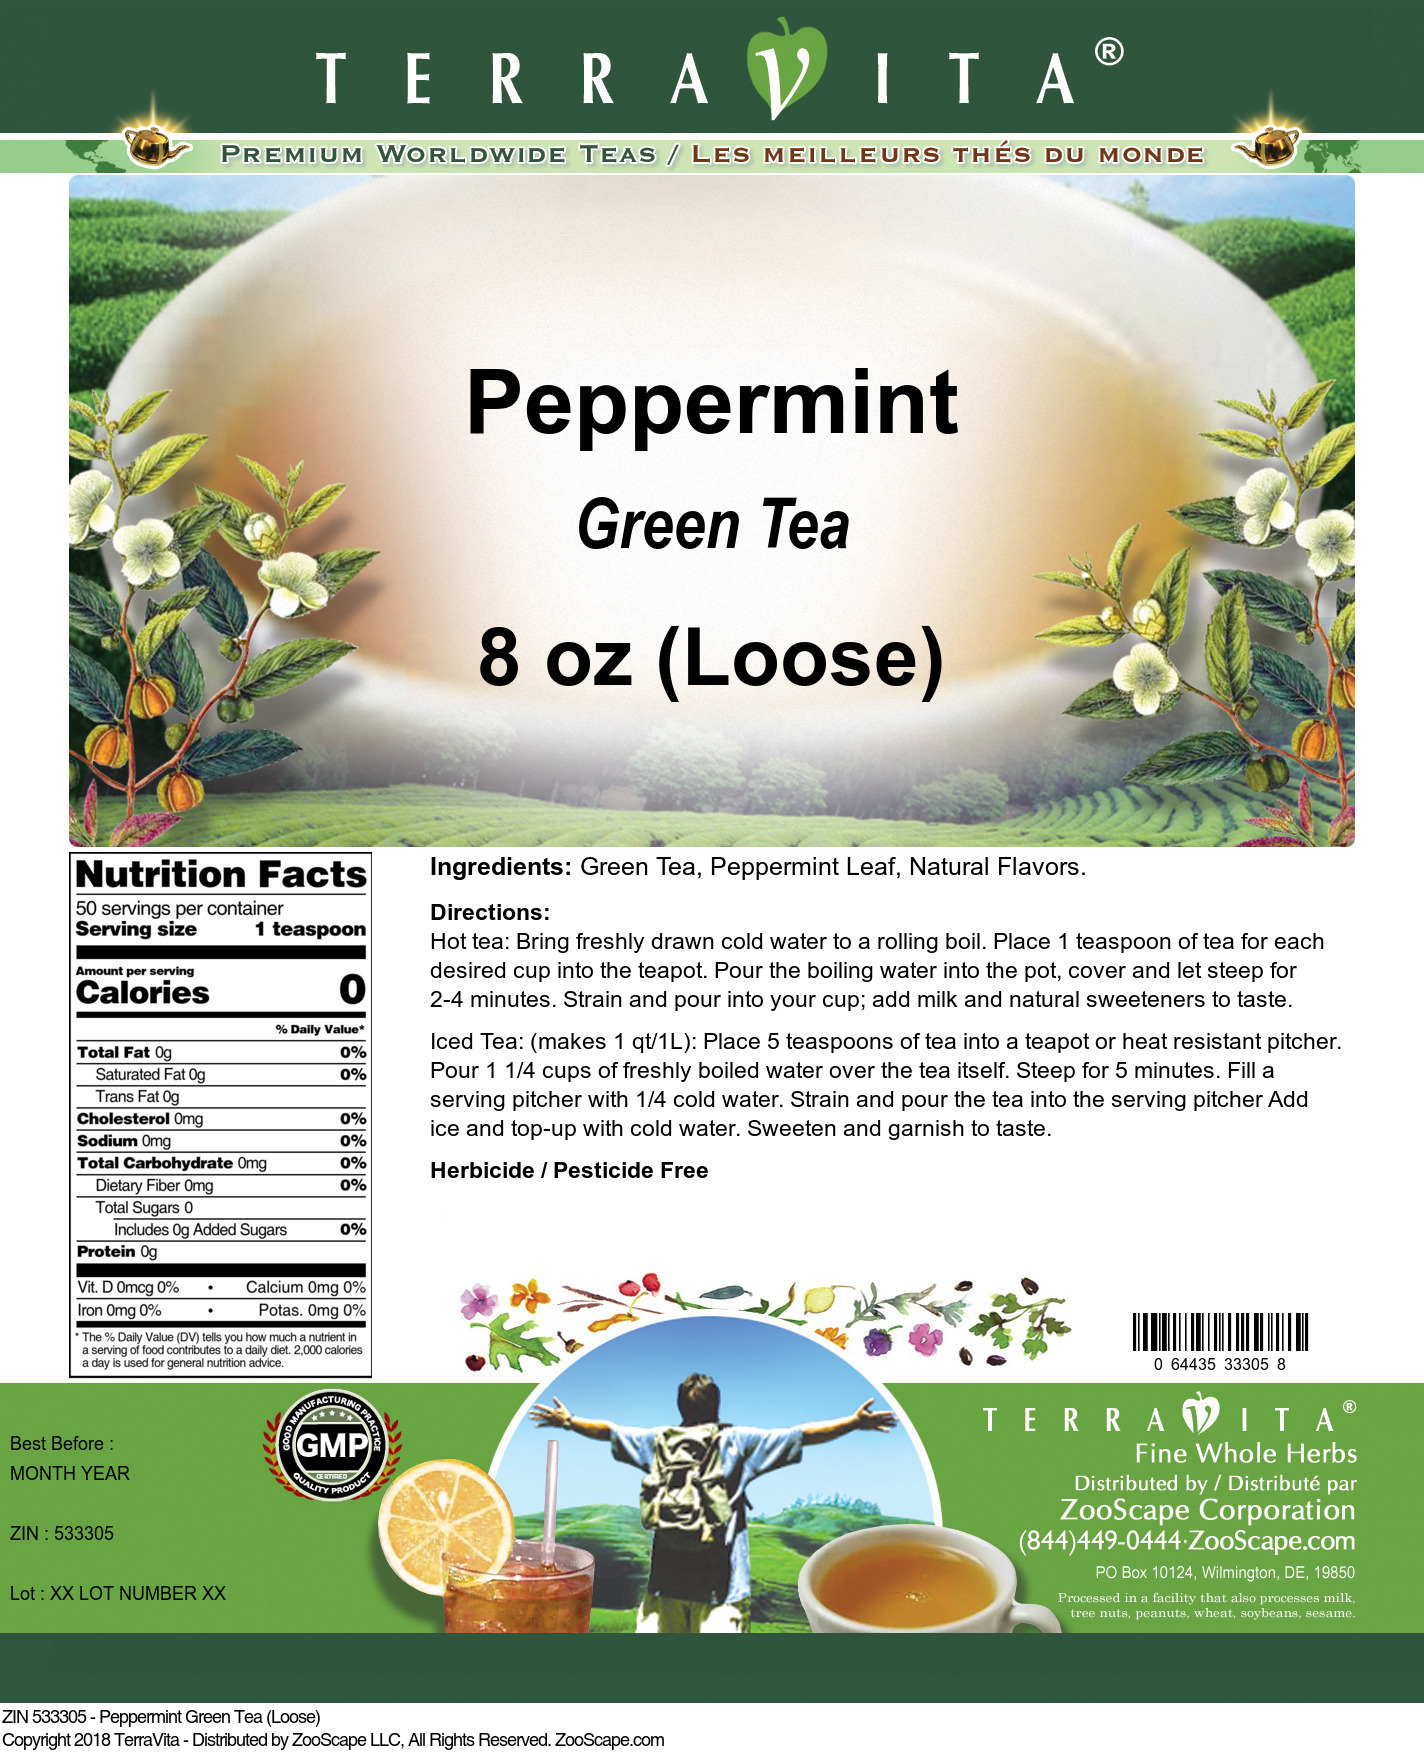 Peppermint Green Tea (Loose) - Label